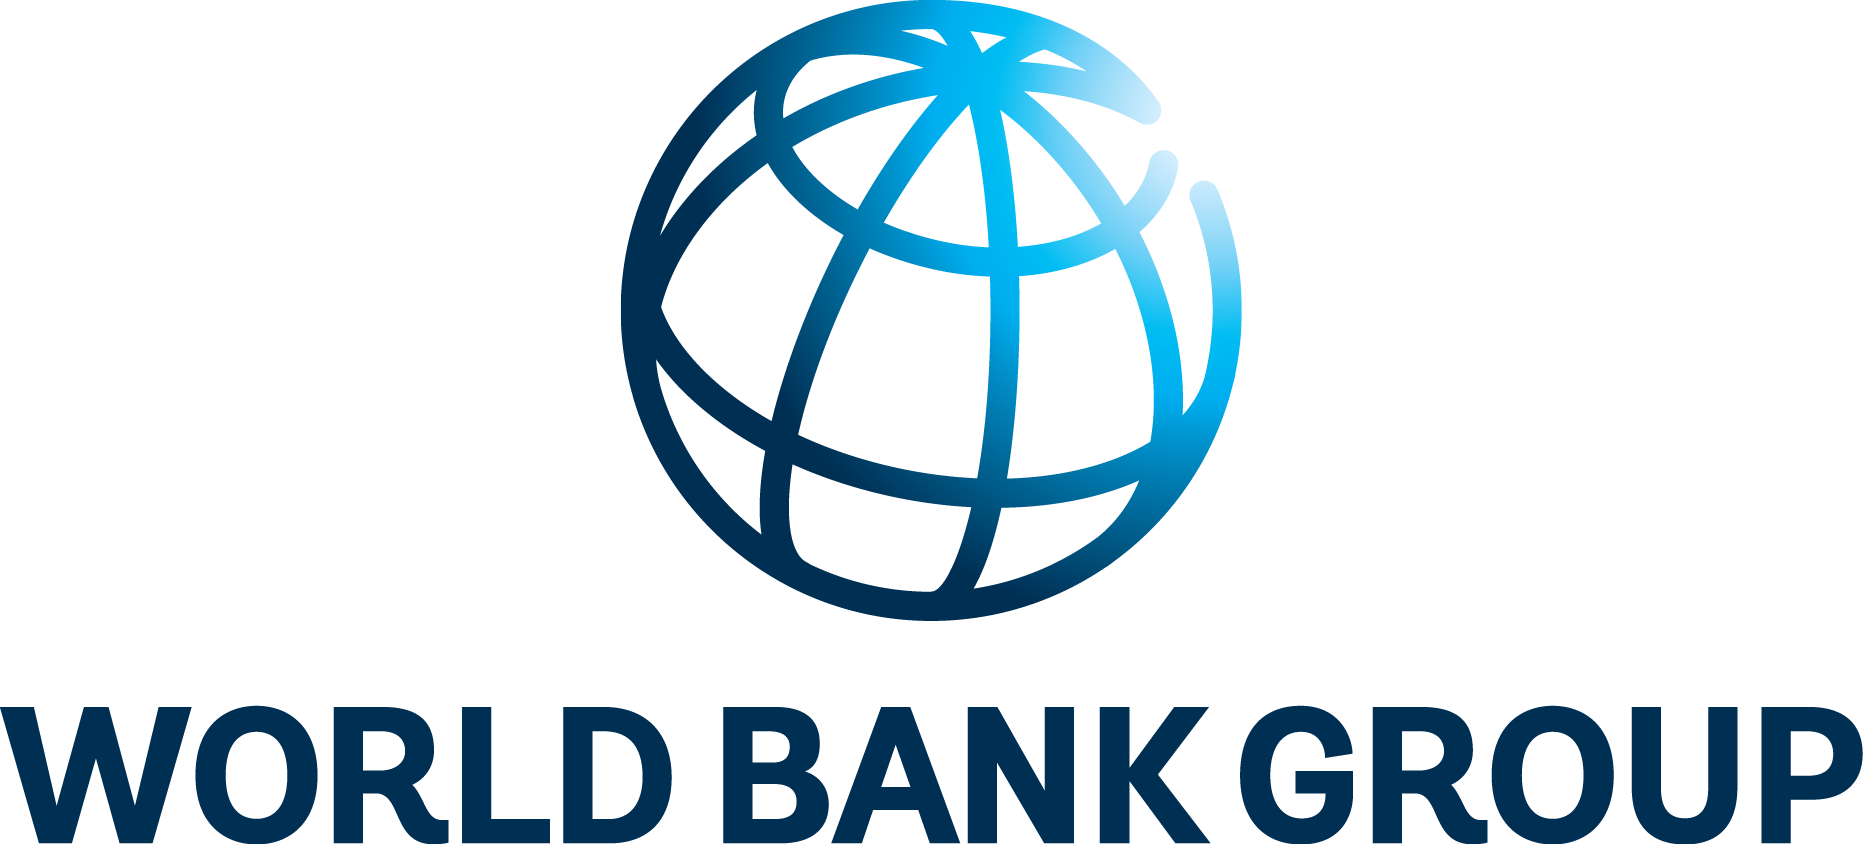 trzcacak.rs-world-bank-logo-png-4016837